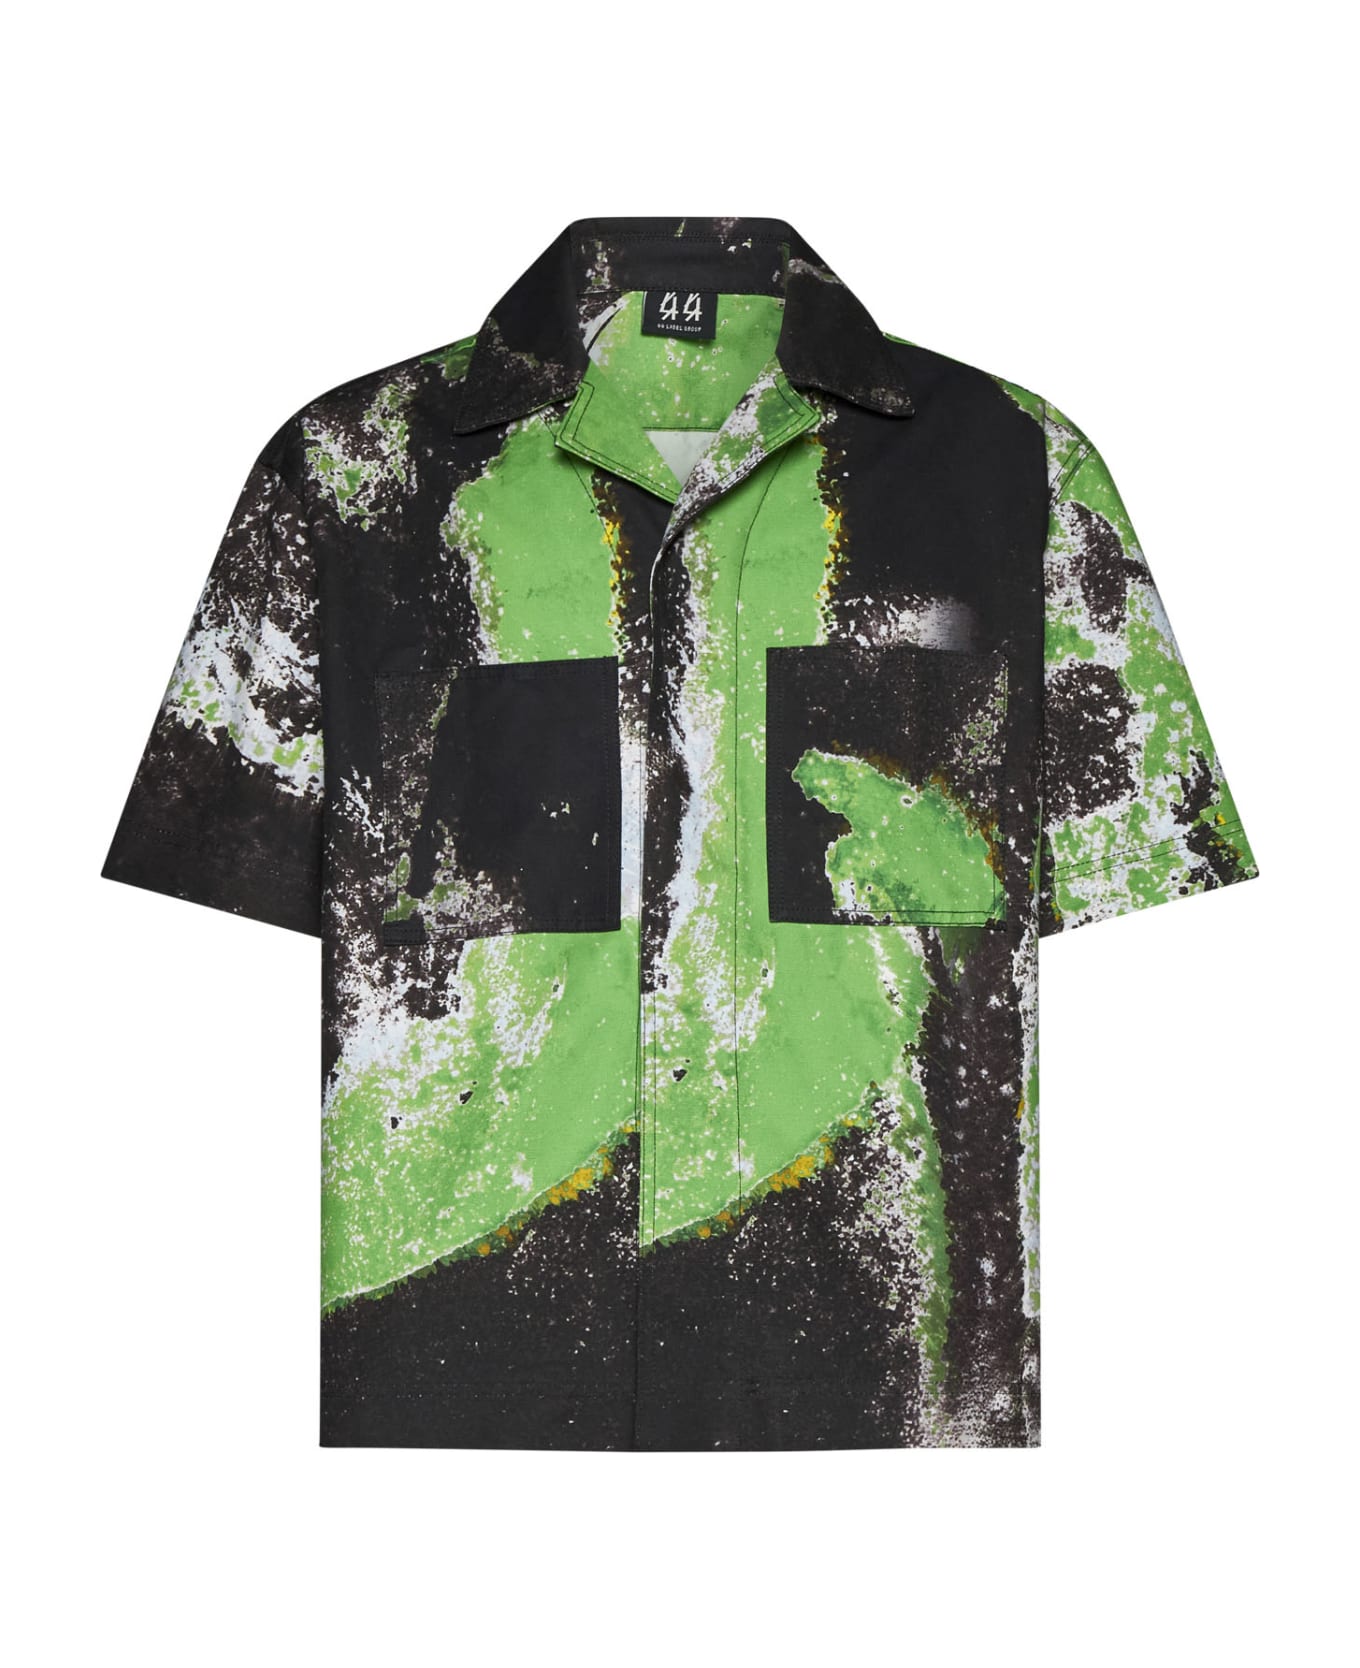 44 Label Group Shirt - Black+grunge green シャツ